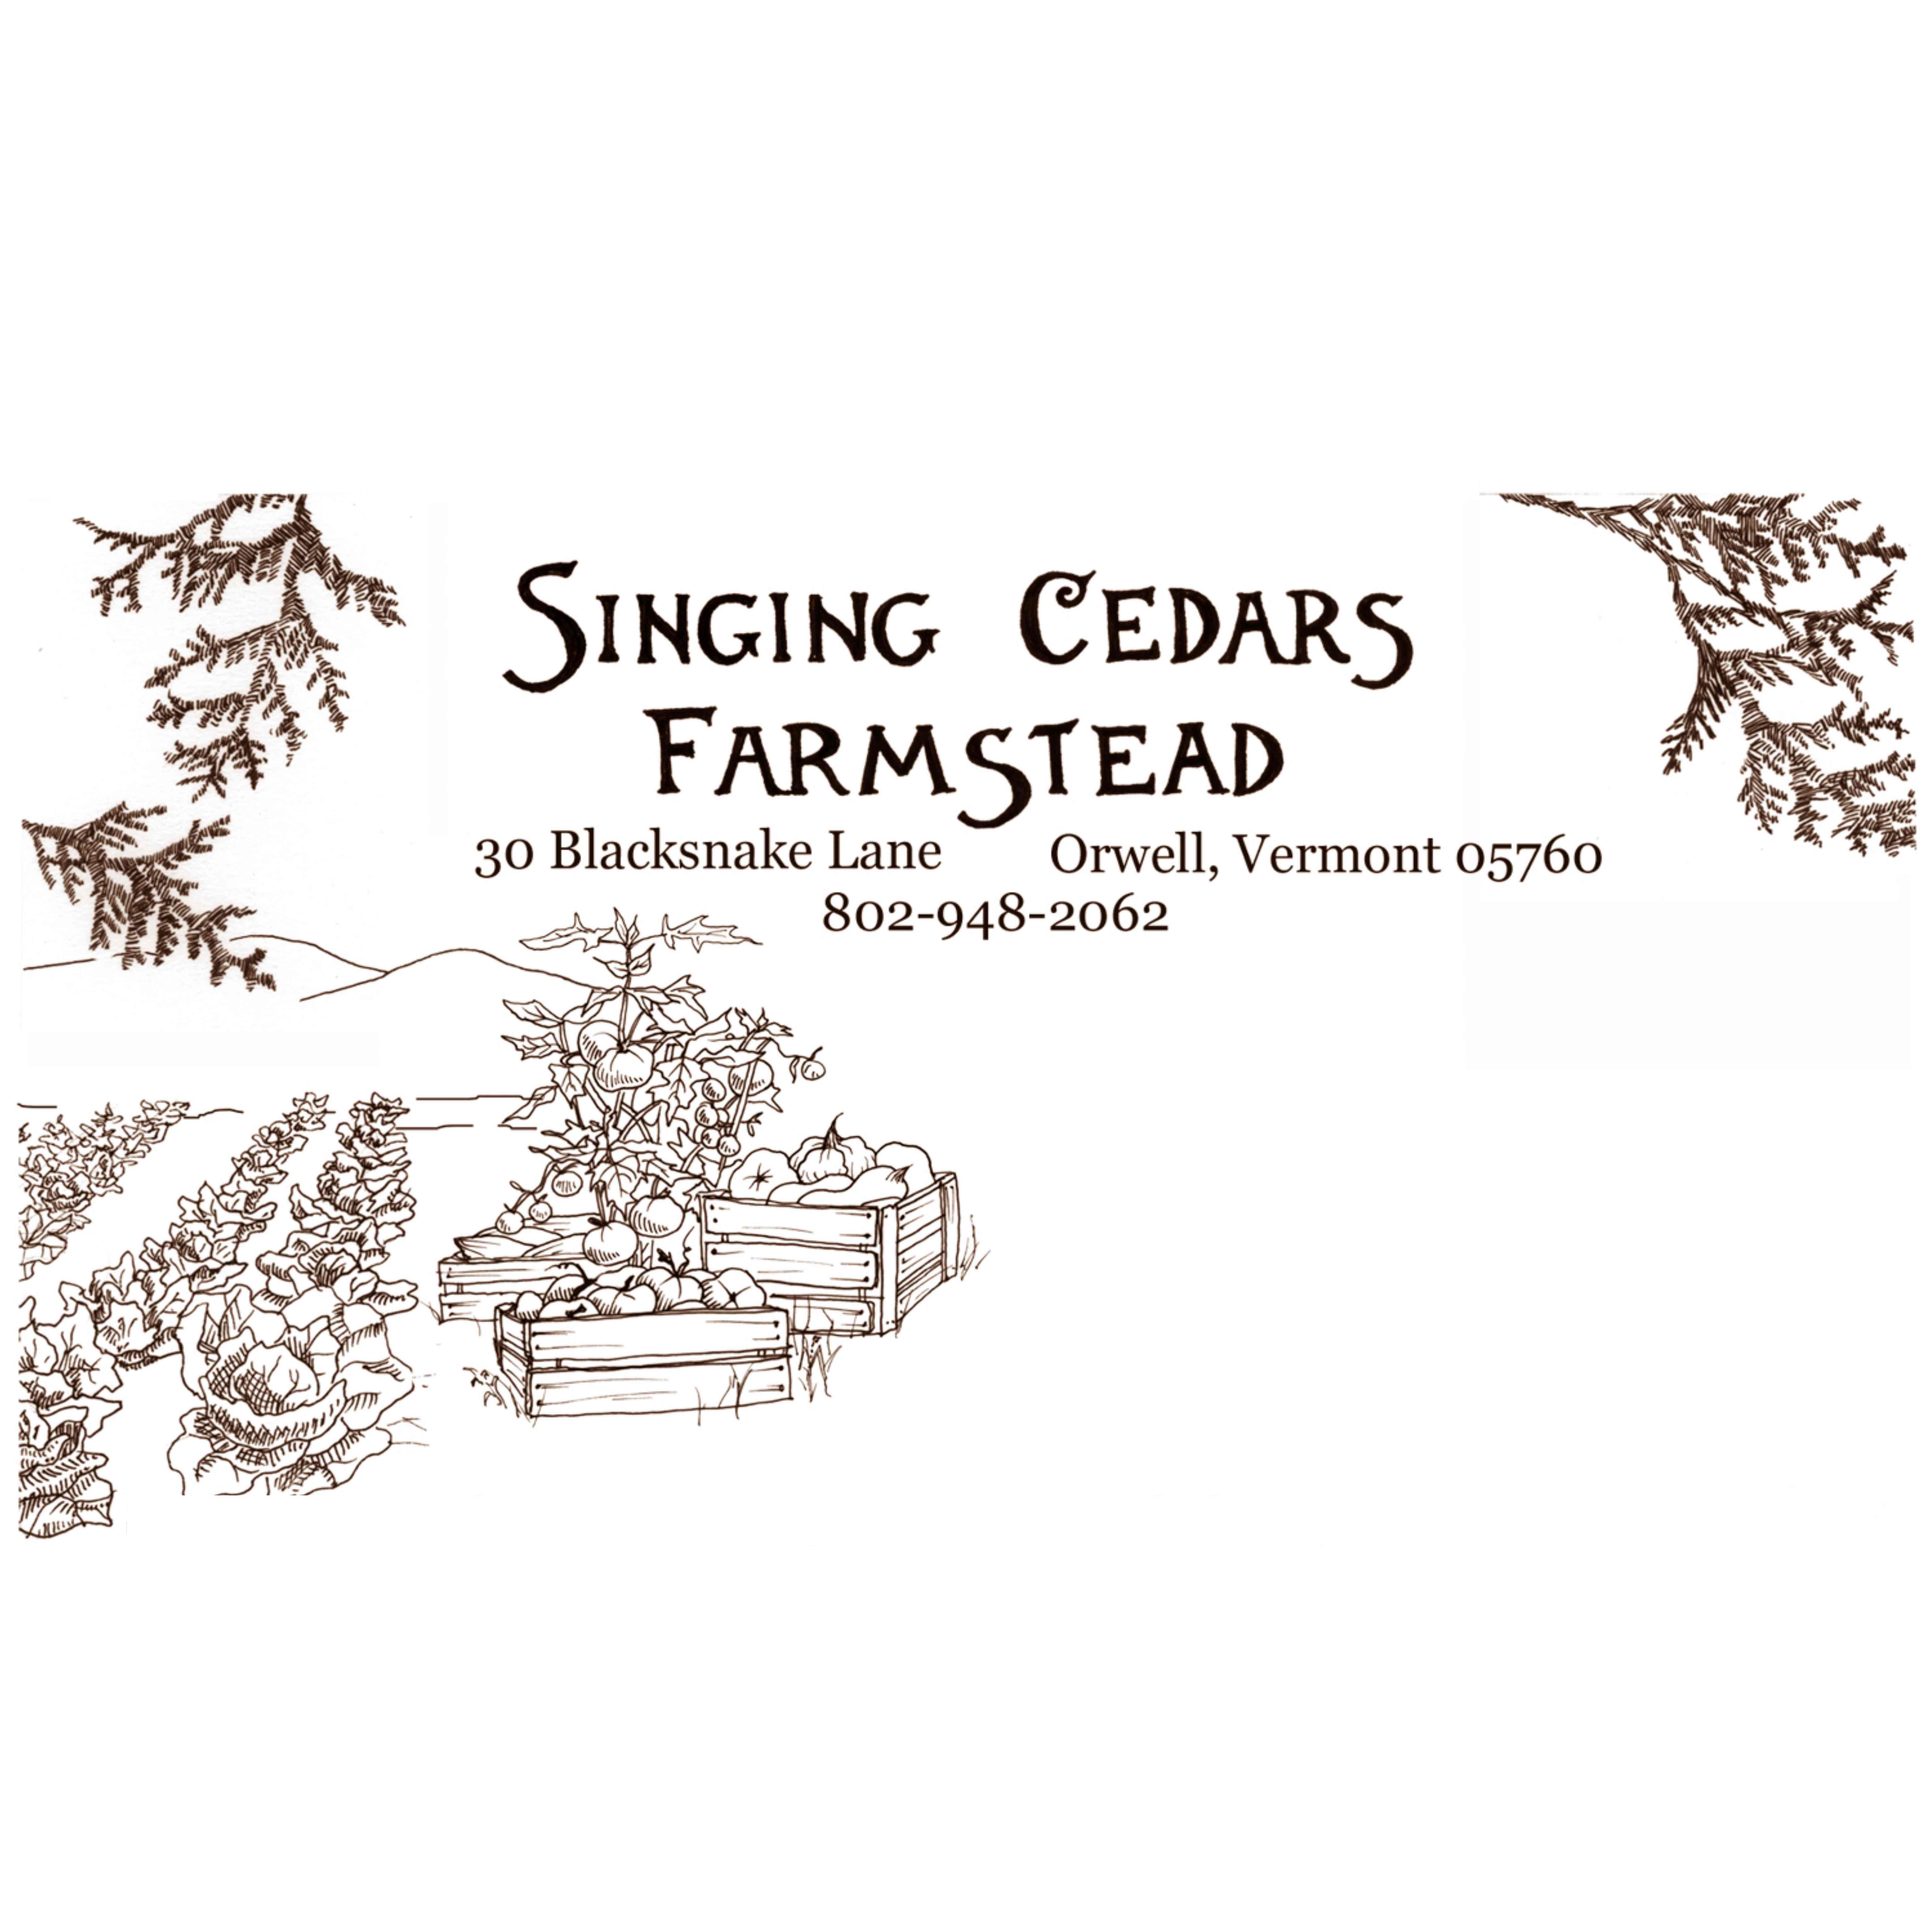 Singing Cedars Farmstead